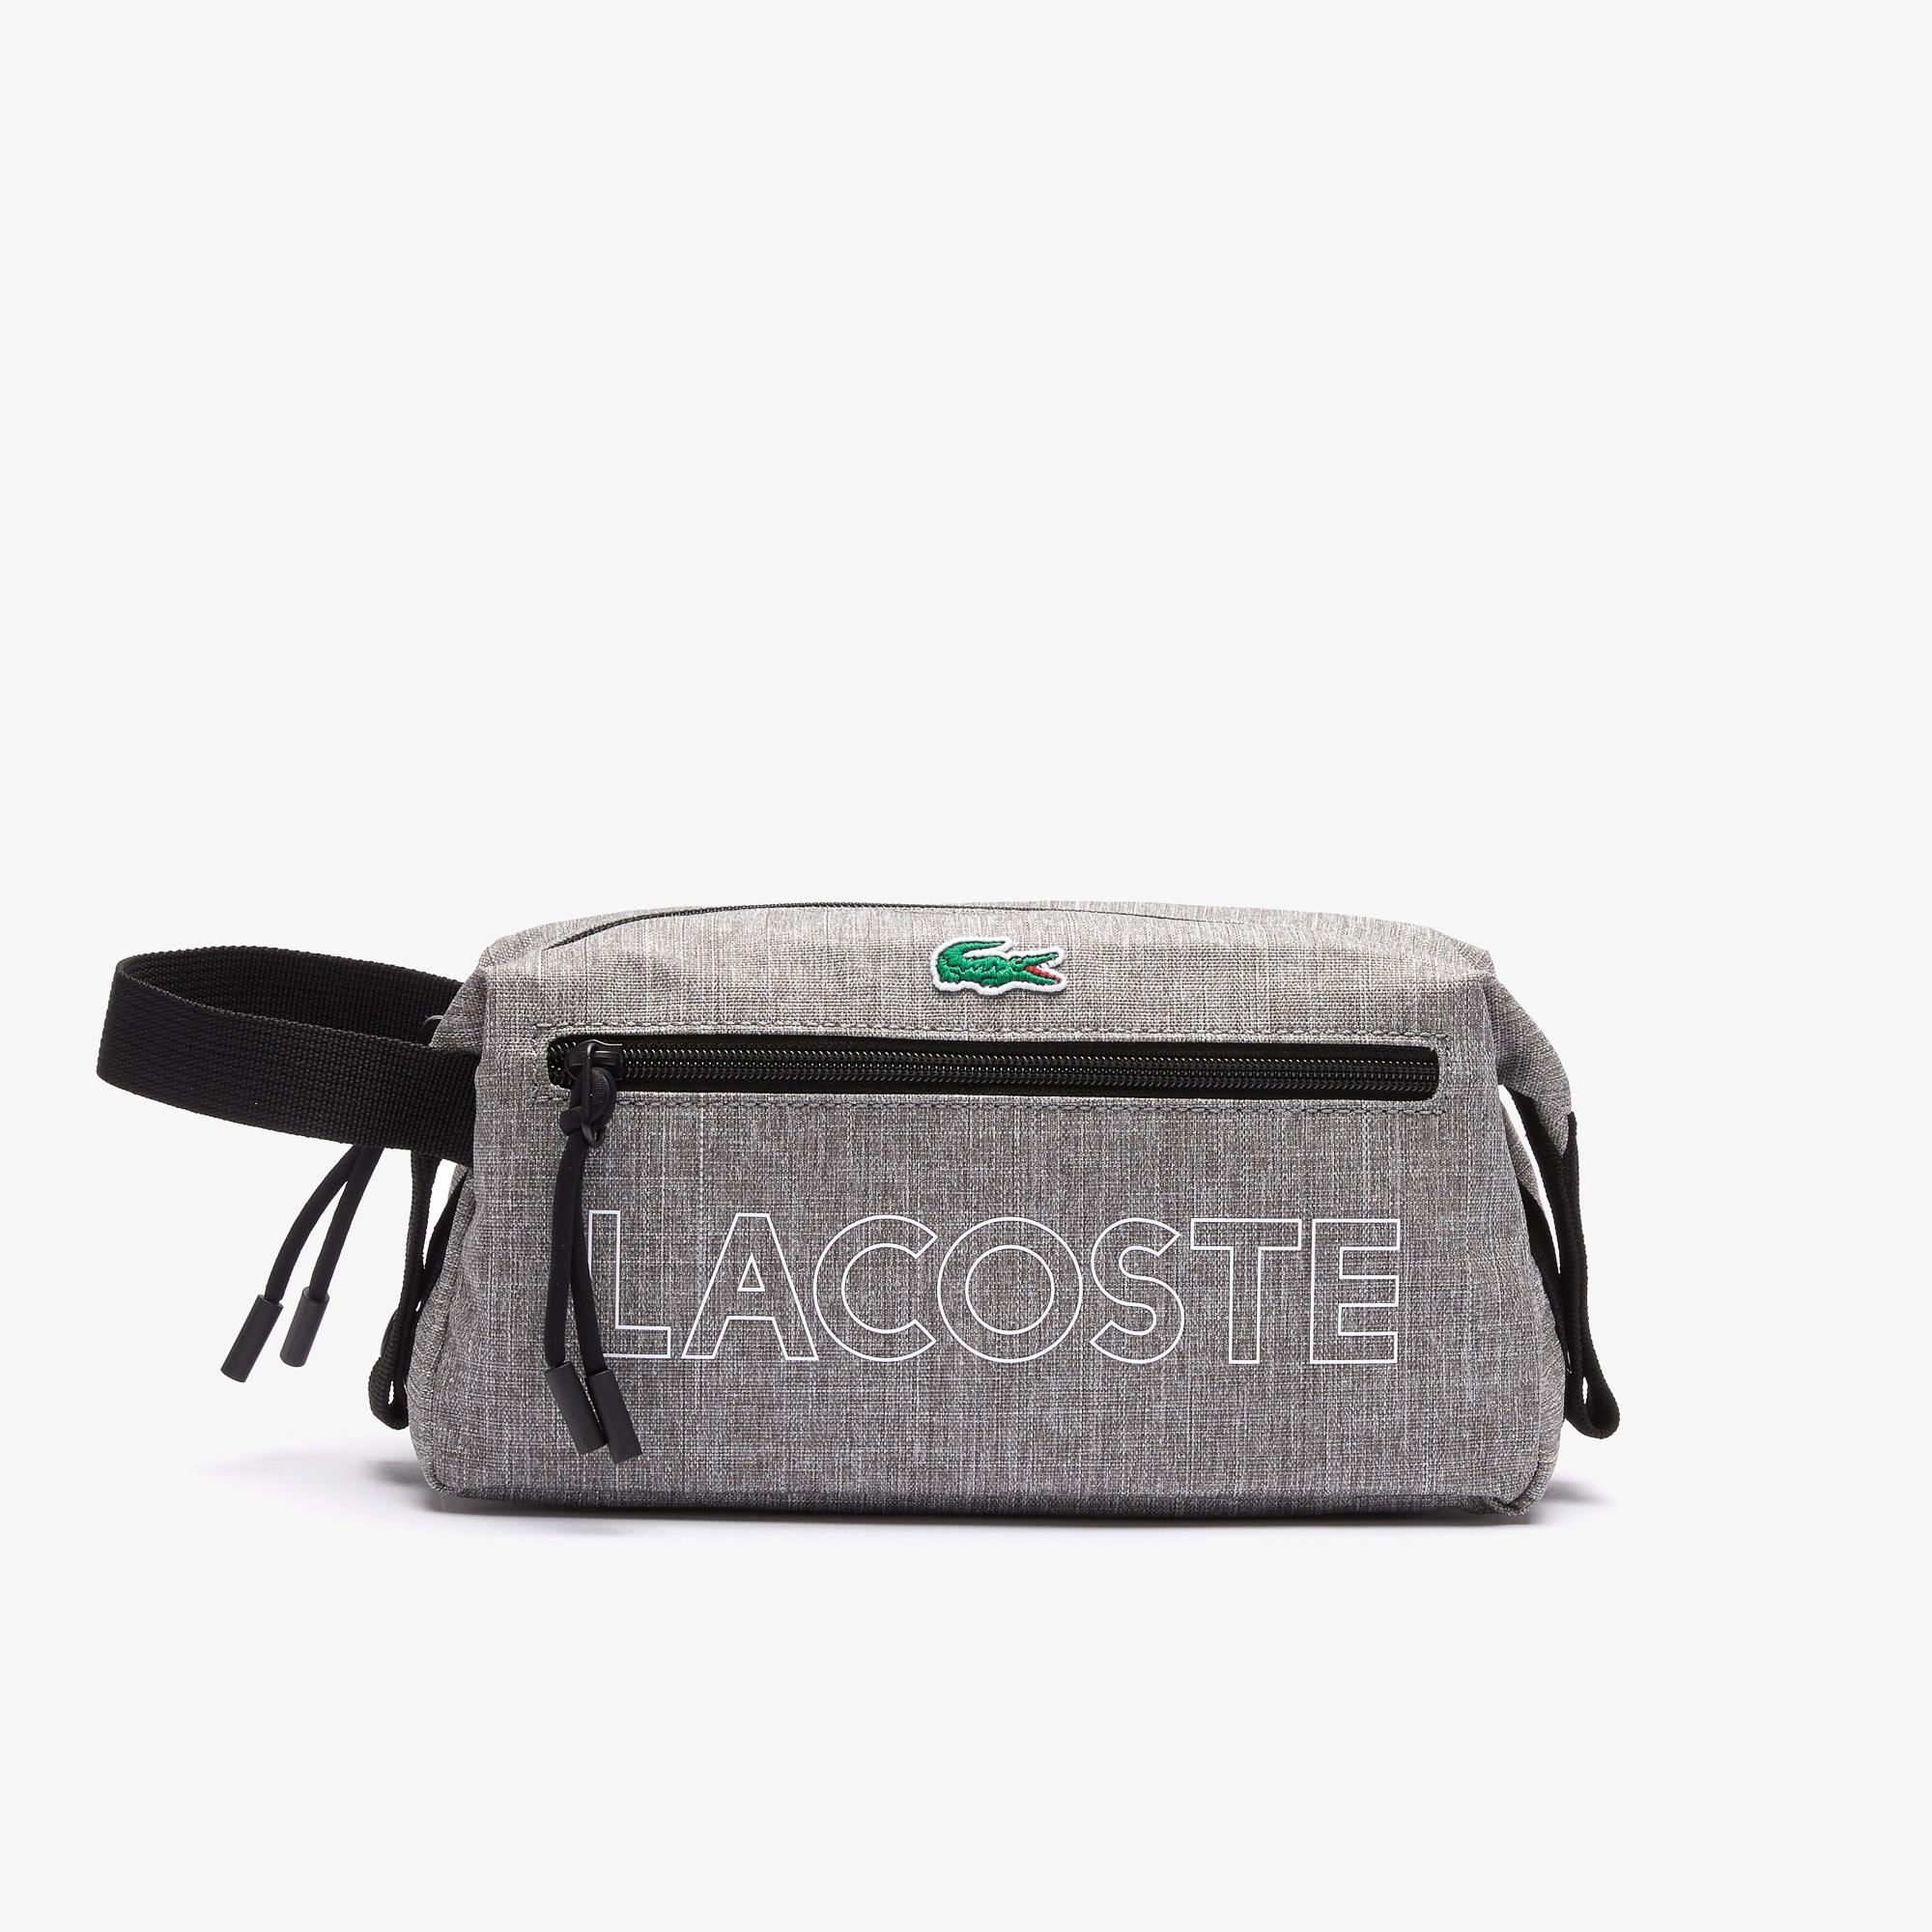 Lacoste Men's Neocroc Heathered Canvas Toiletry Bag